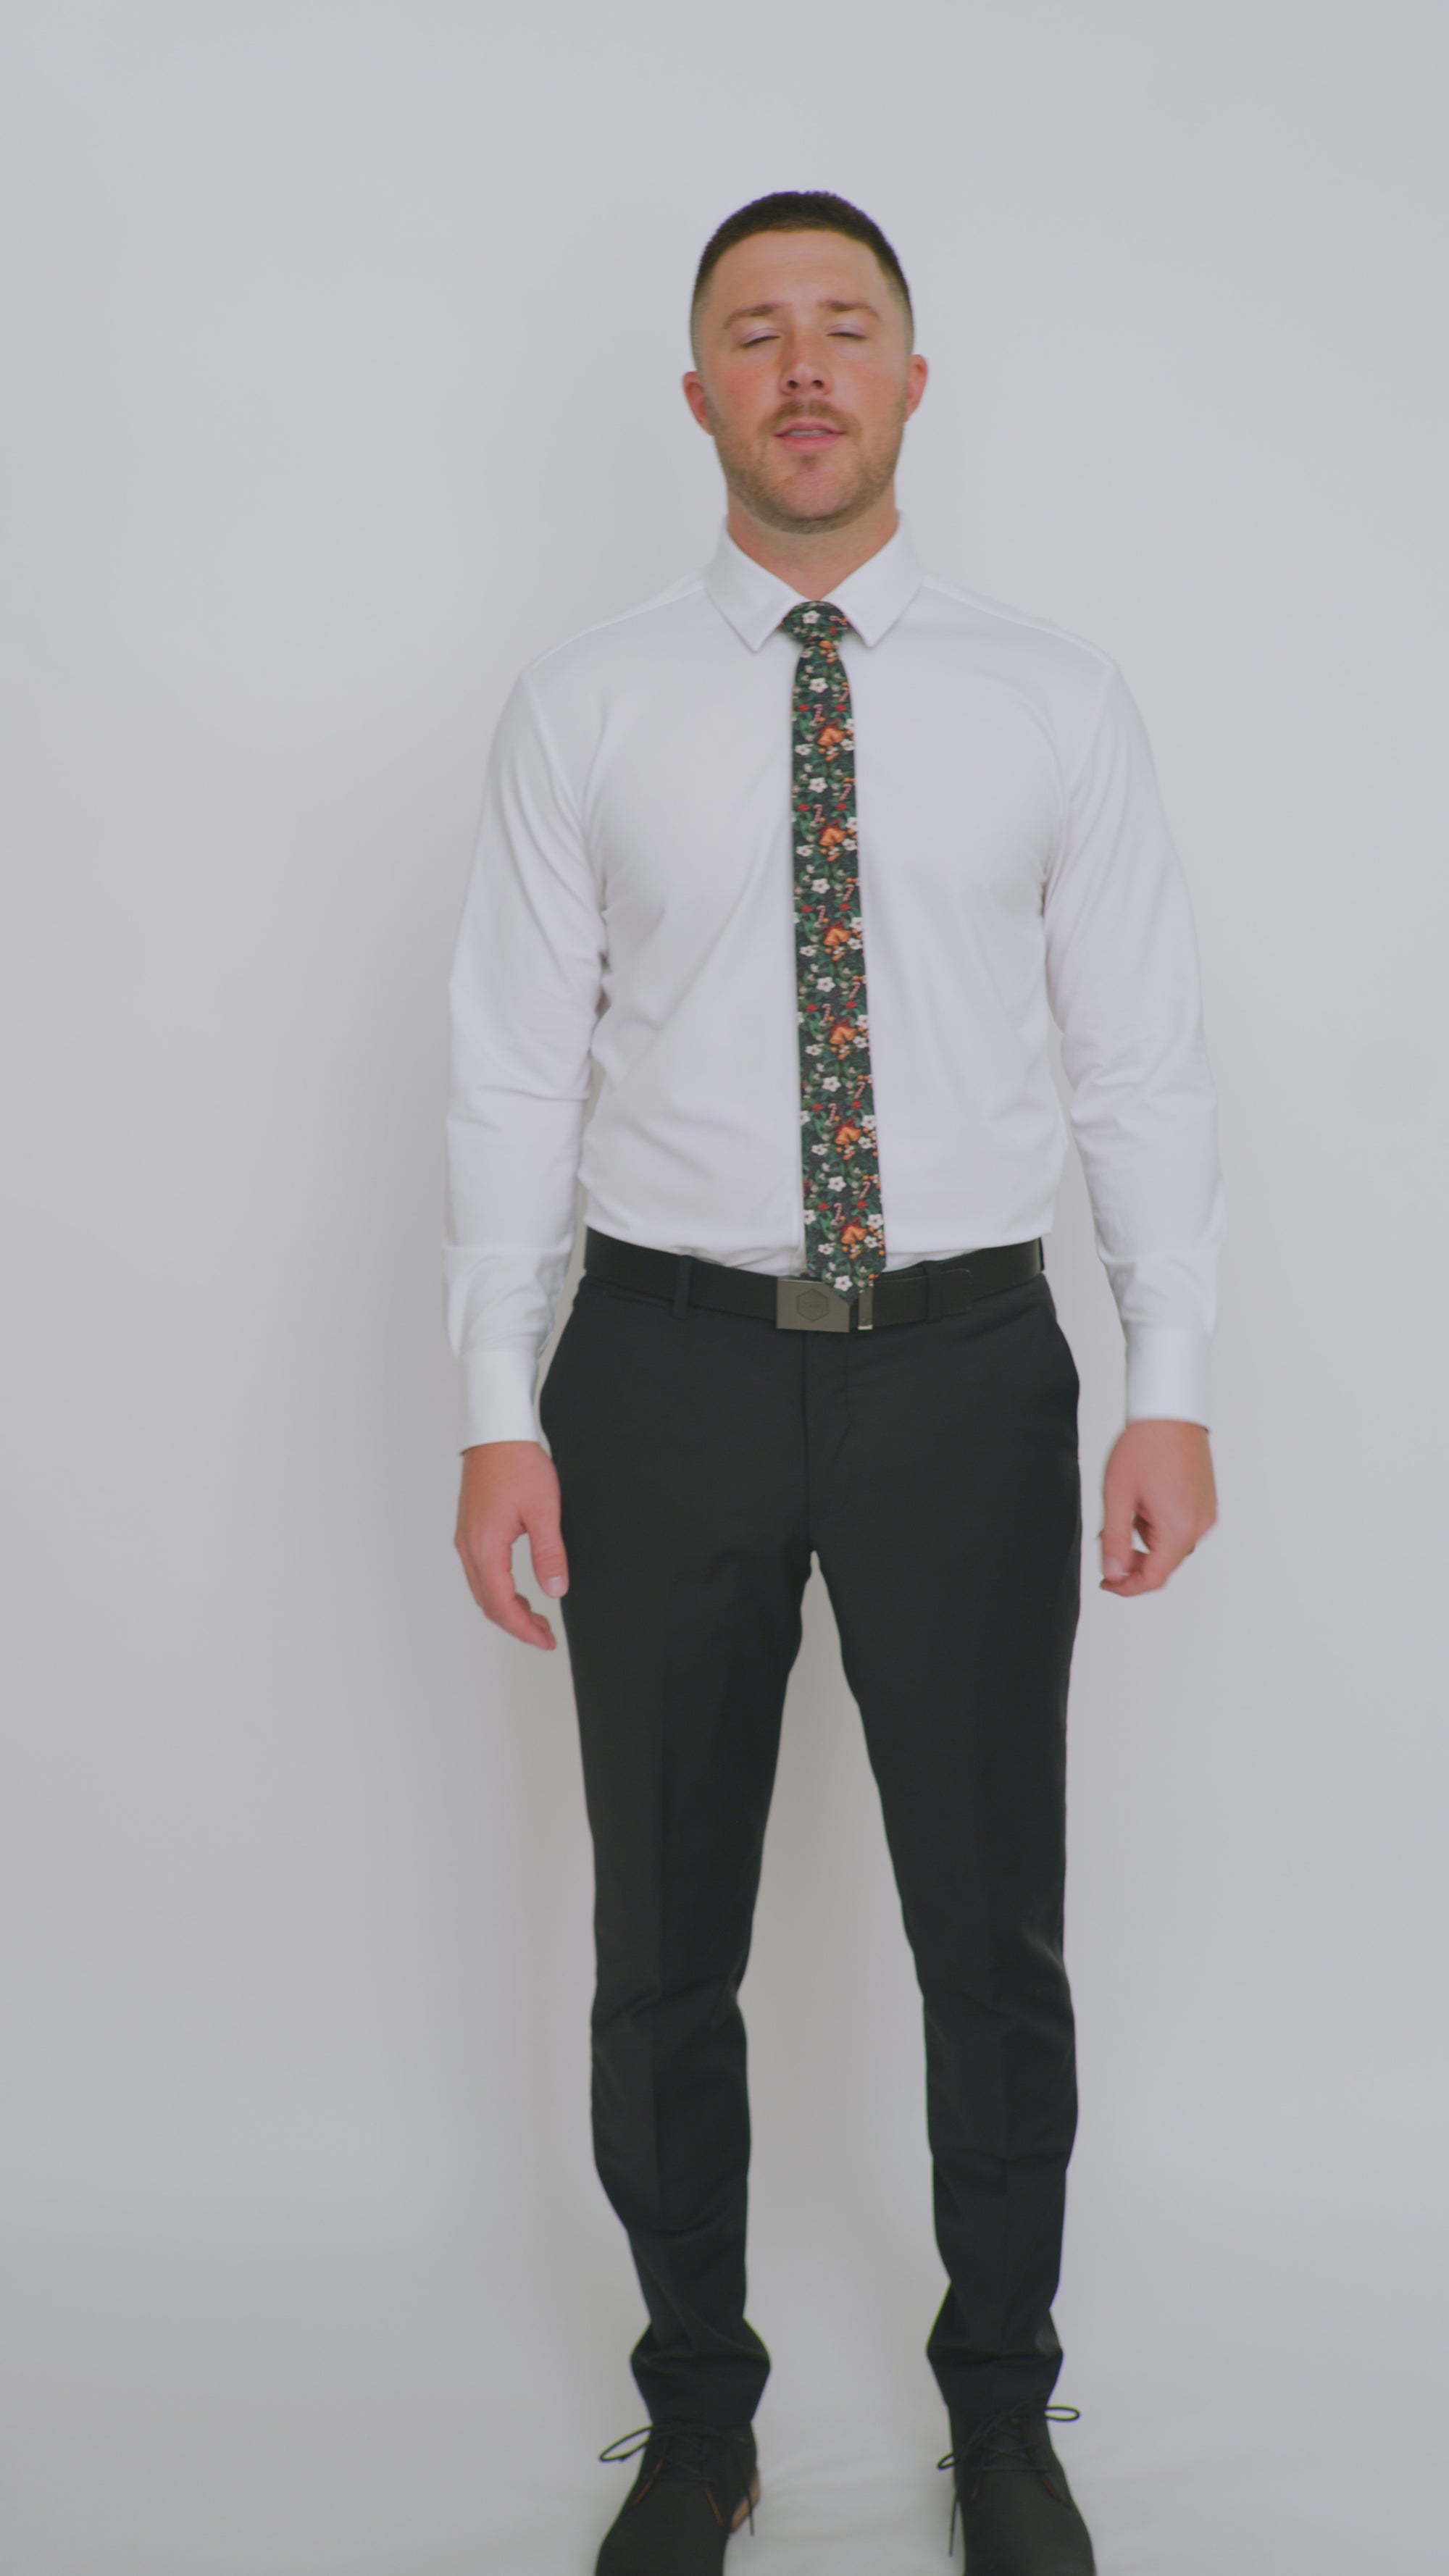 Dressing White Shirt Black Tie Gray Stock Photo 140733844 | Shutterstock